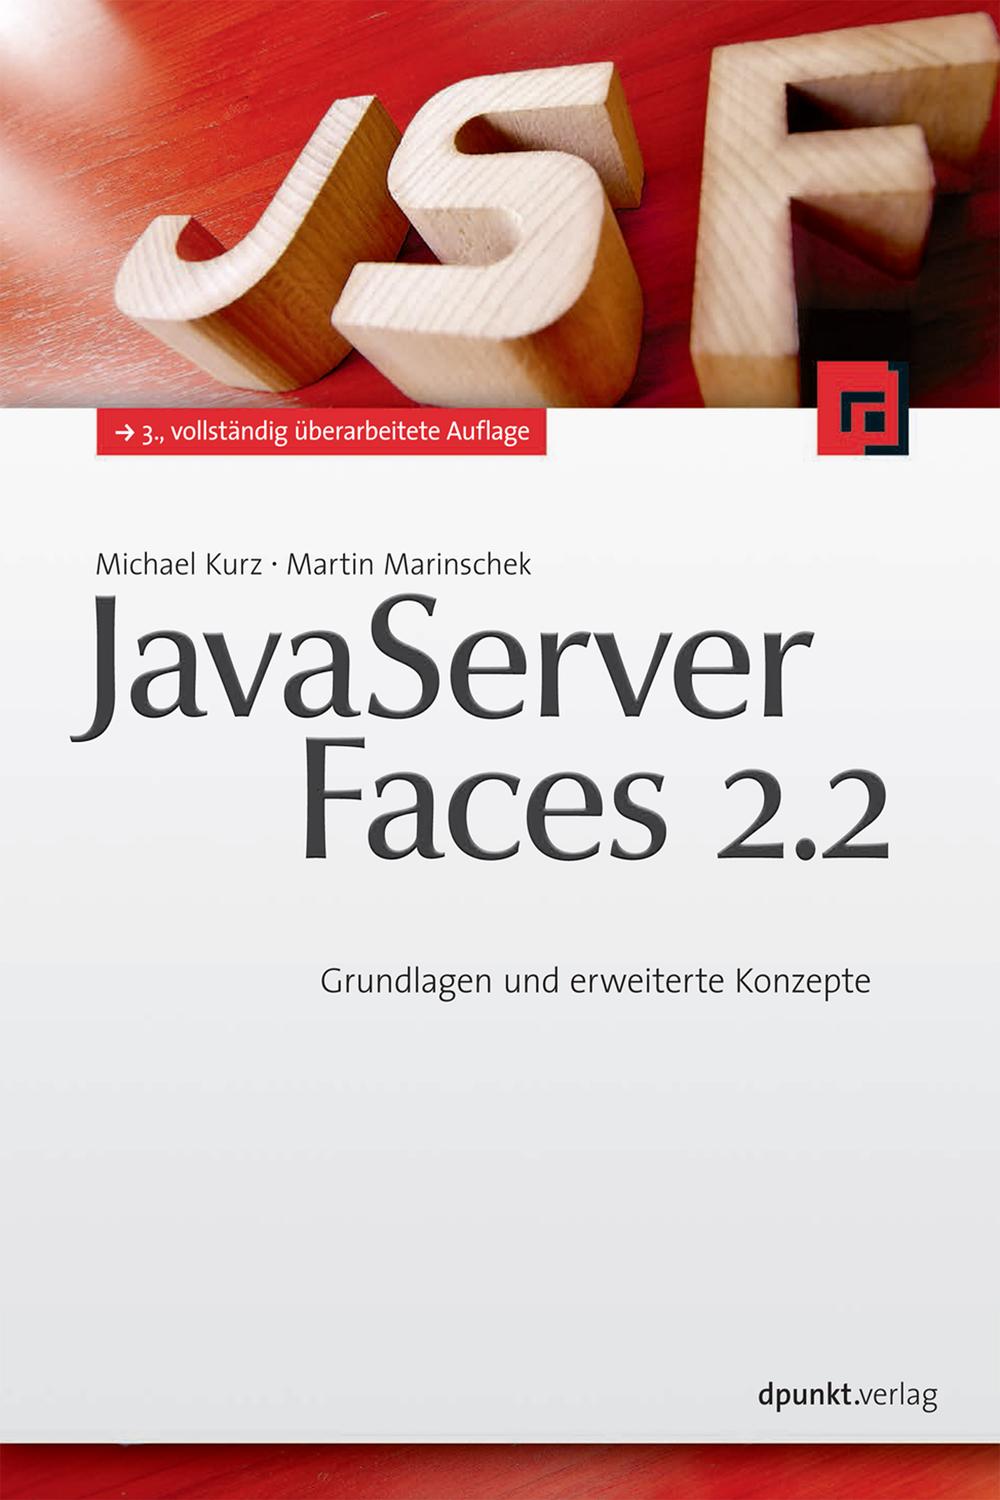 JavaServer Faces 2.2 - Michael Kurz, Martin Marinschek